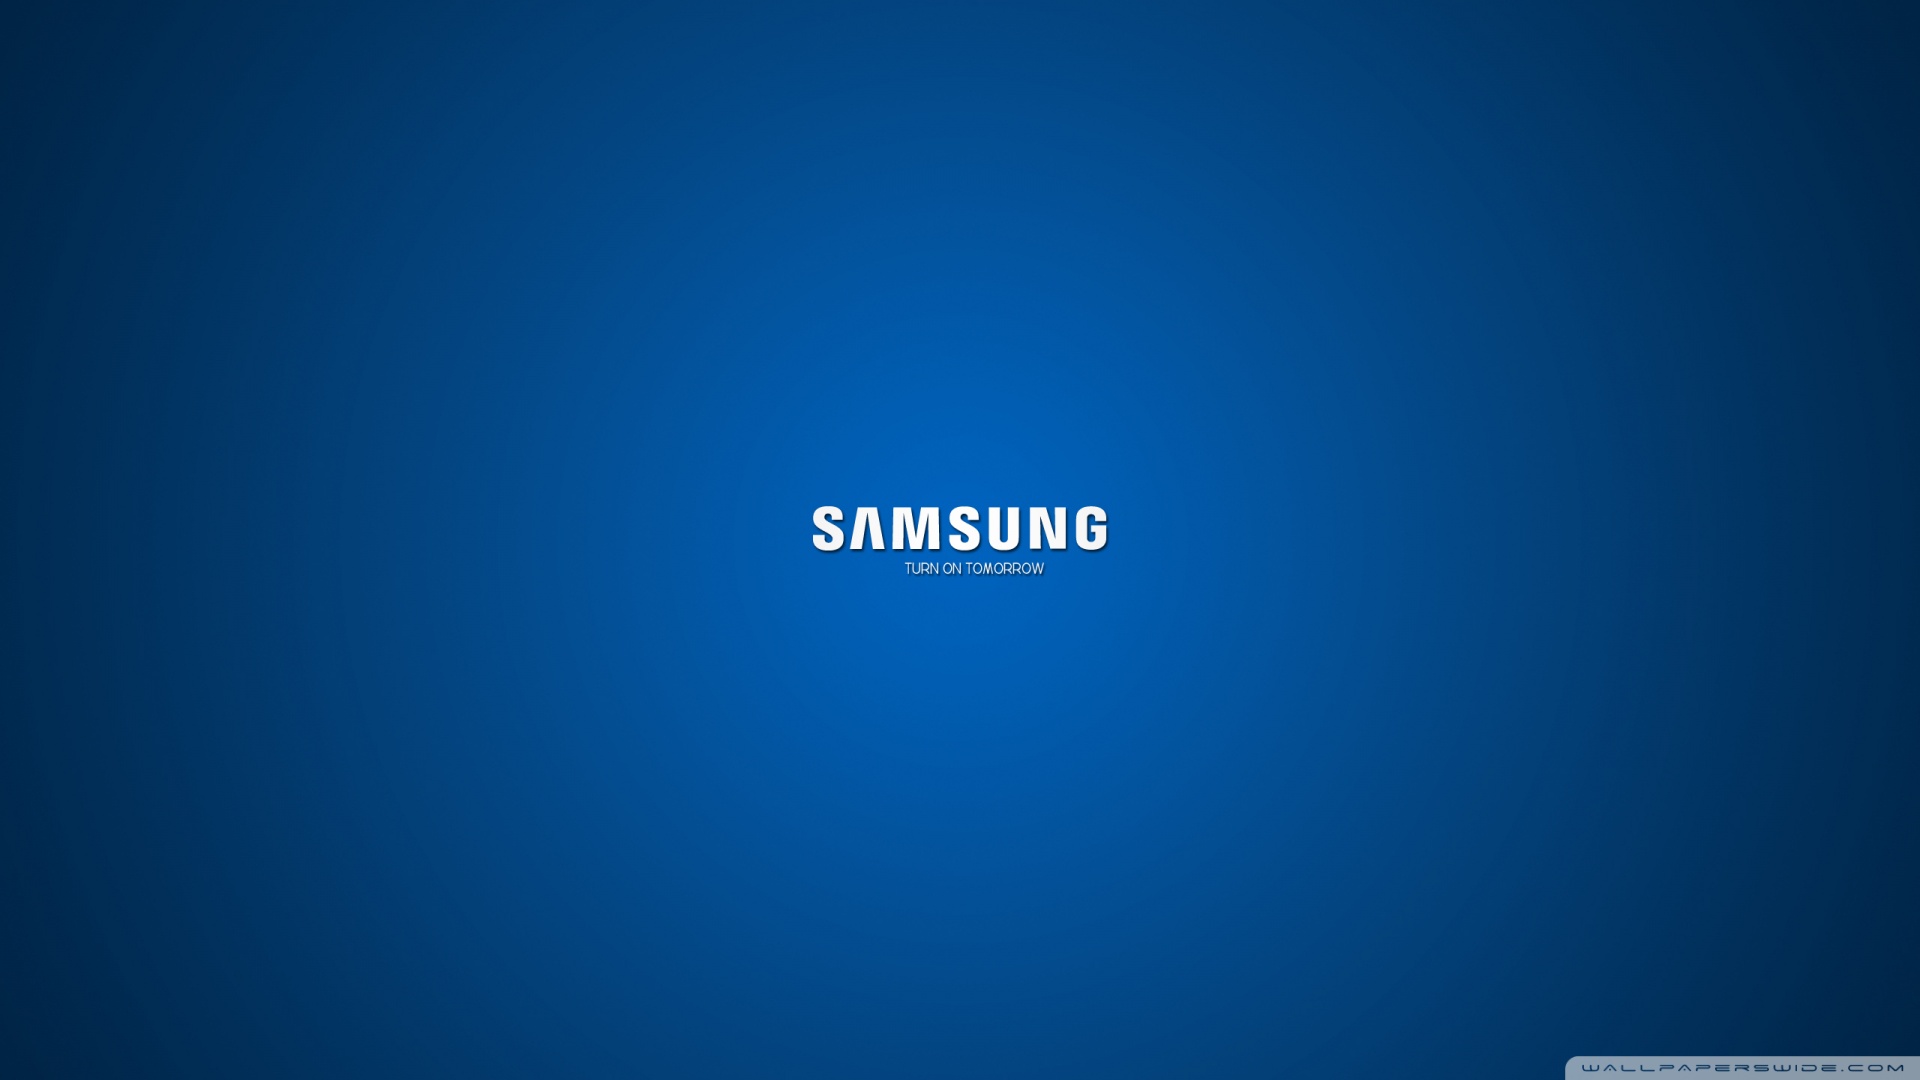 Samsung Turn On Tomorrow Wallpaper